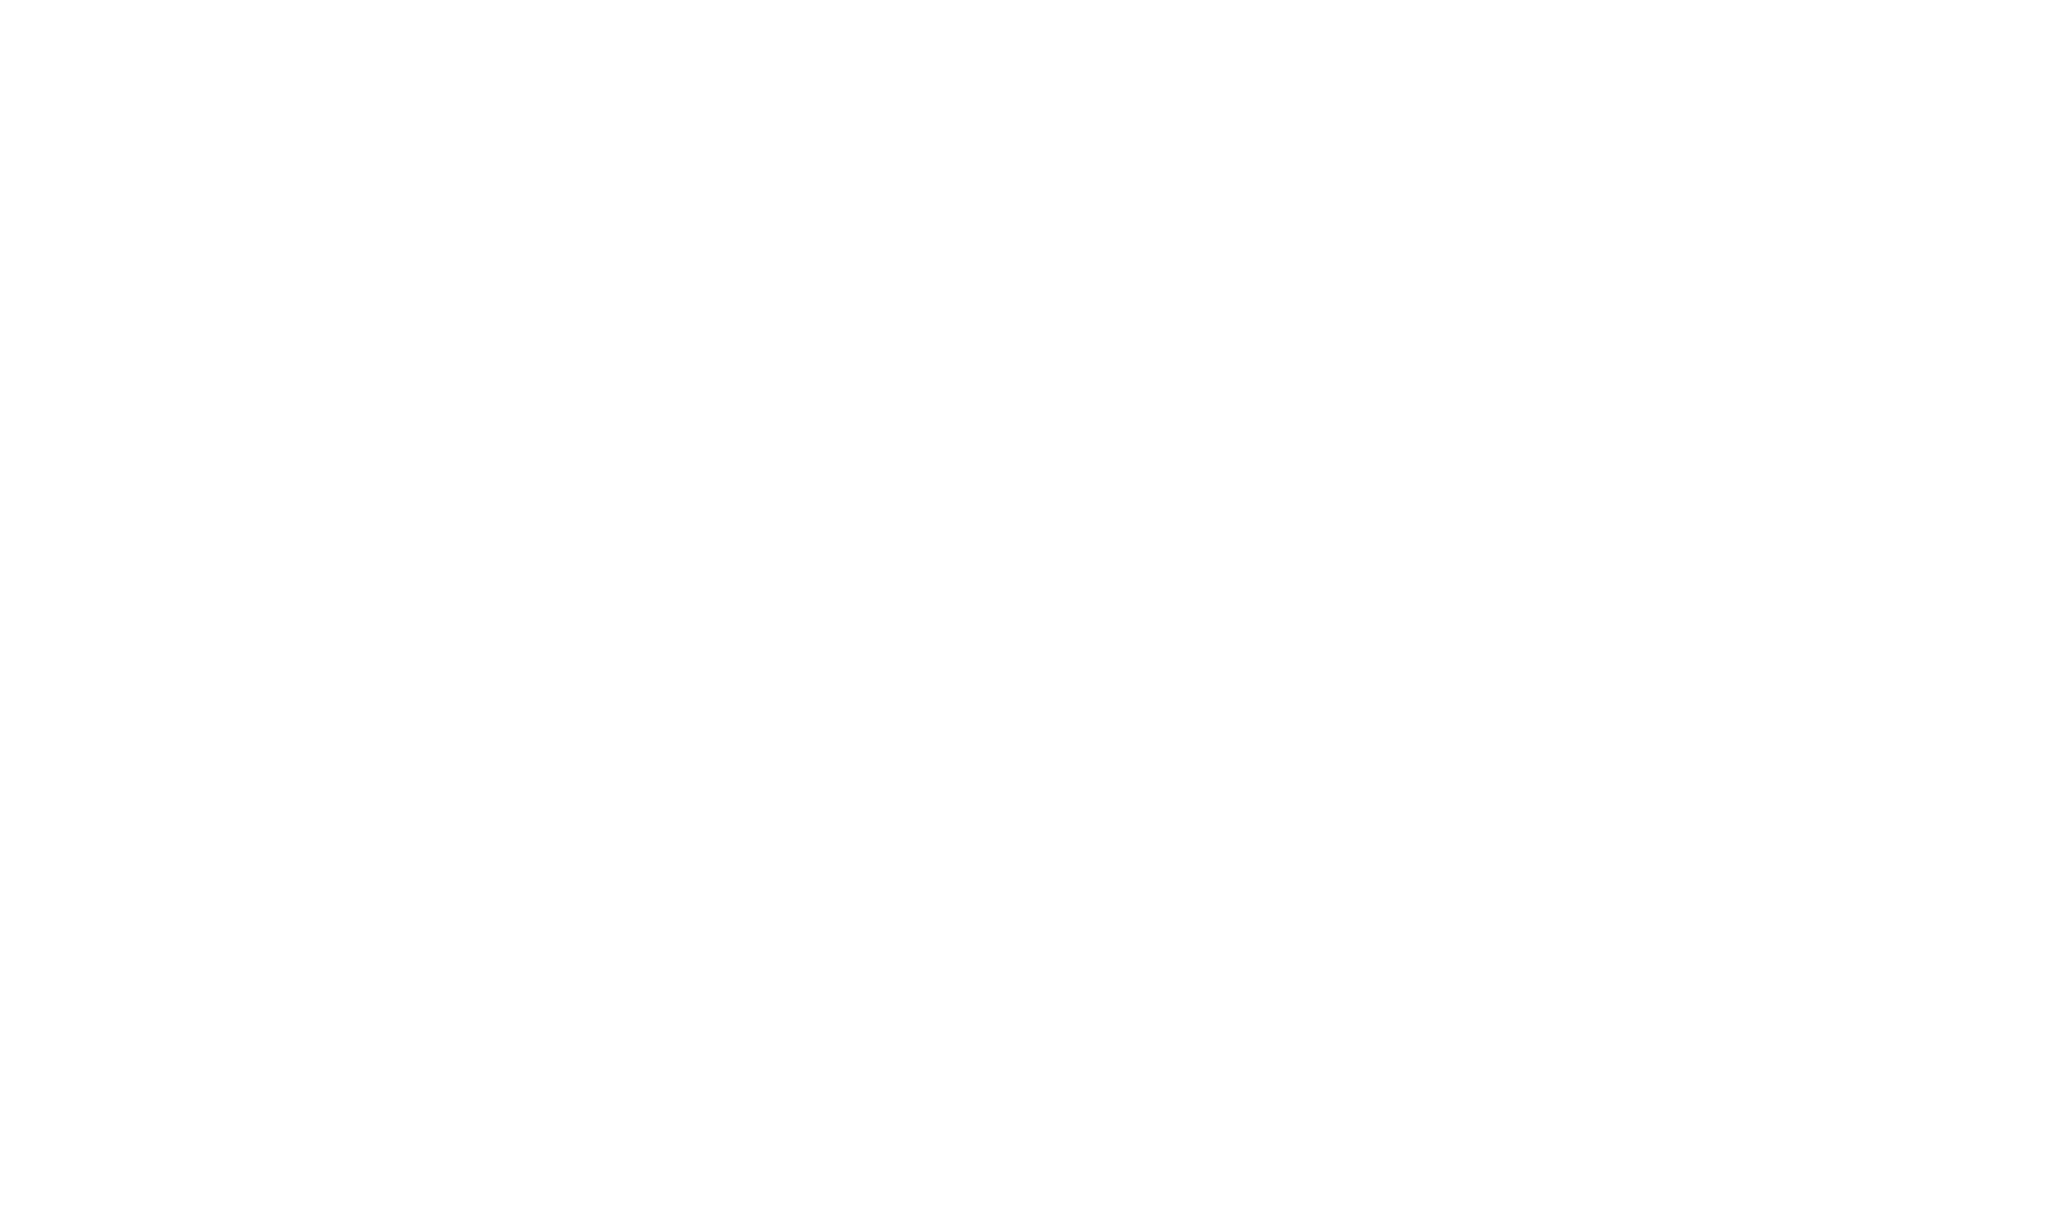 The Lionsgate logo